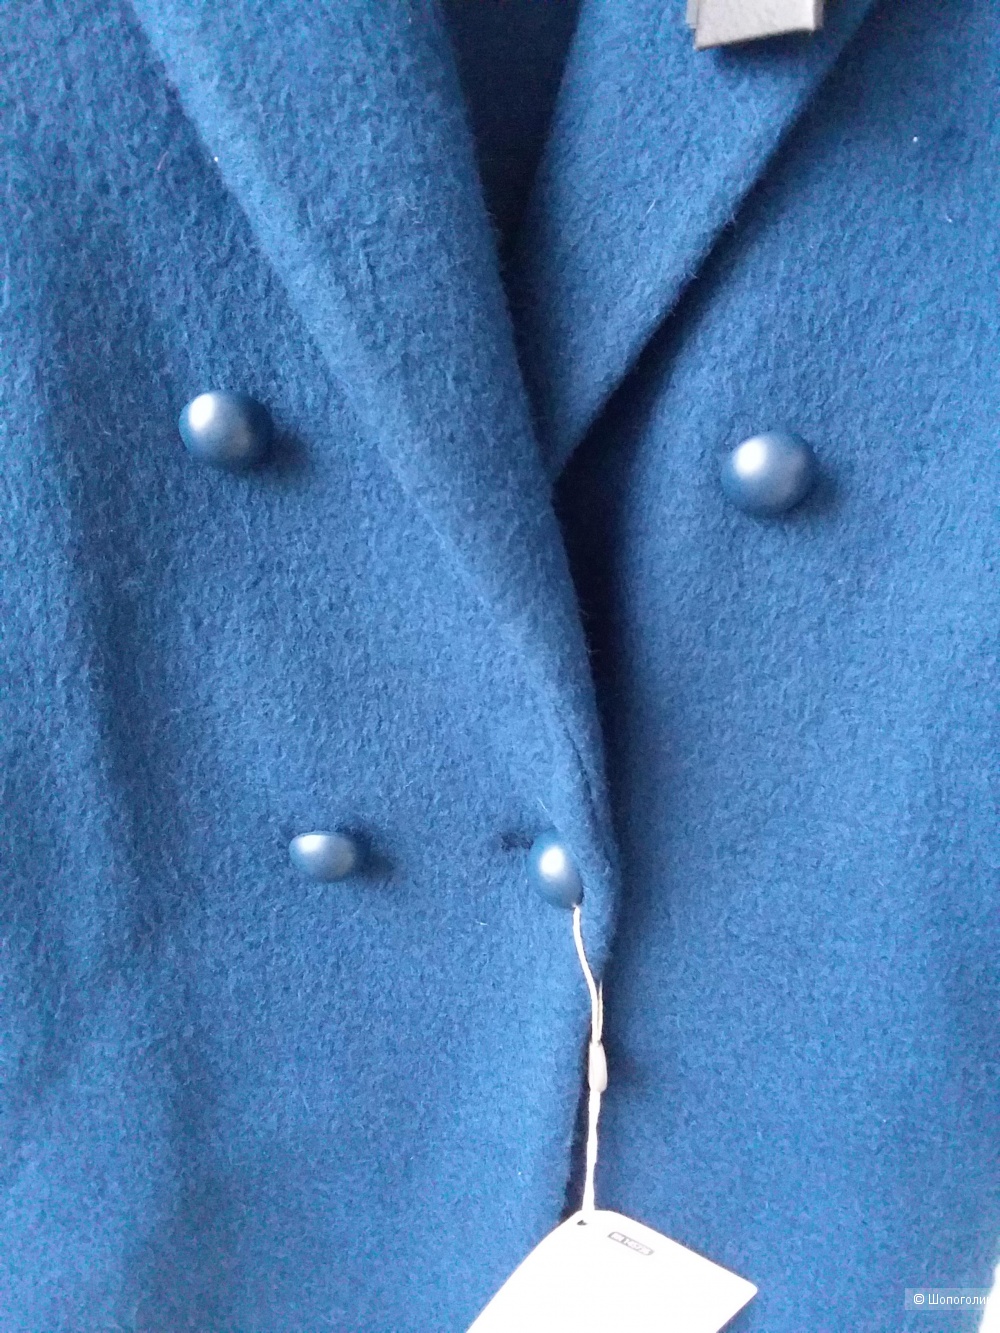 Женское пальто PINKO на 46-46 размер